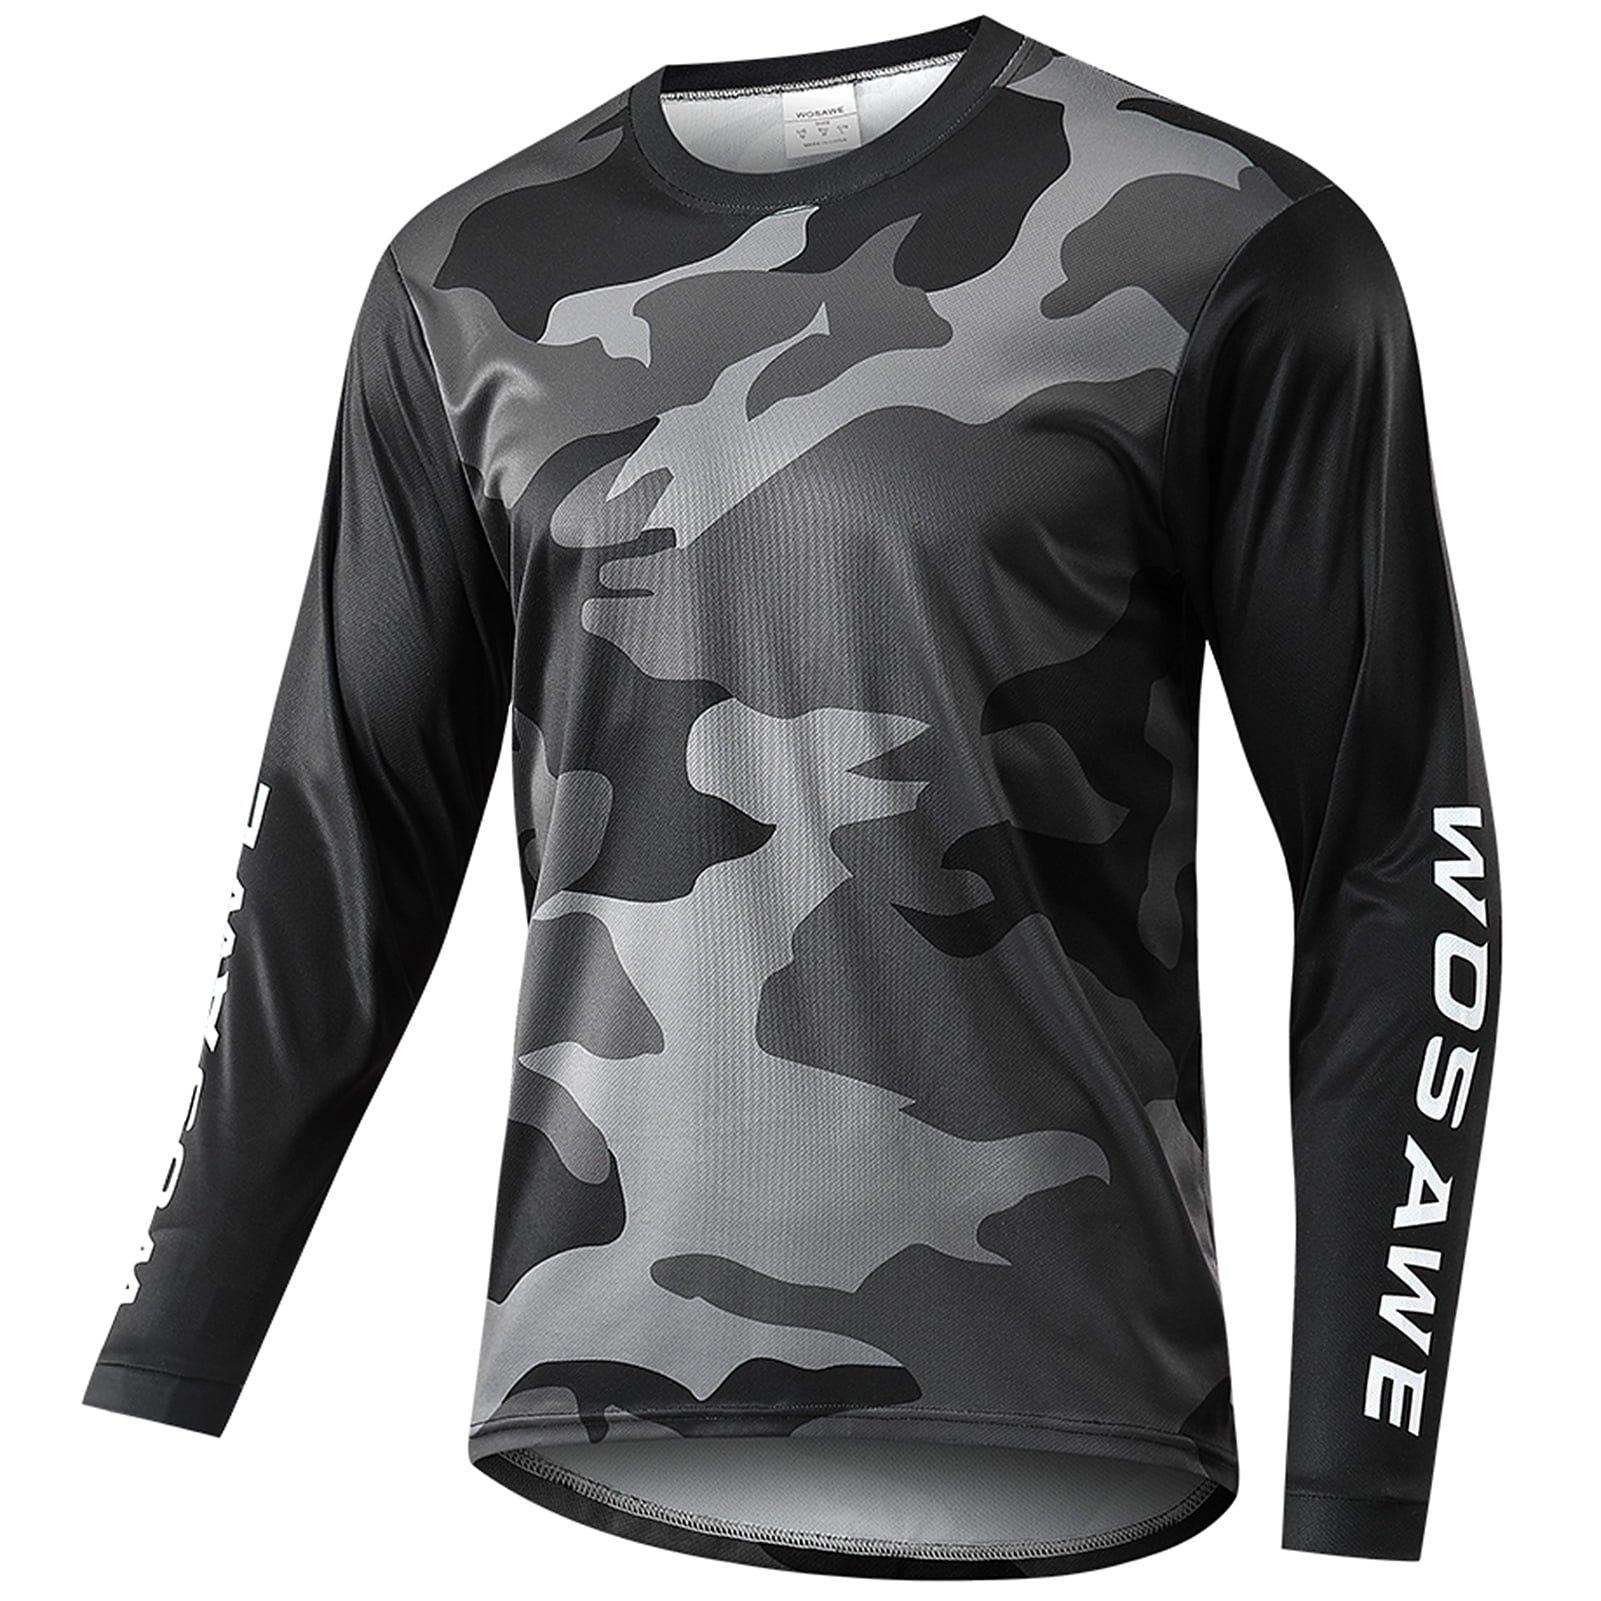 Mens MTB Cycling Jersey Long Sleeves High Quality Biking Cycle Racing Shirt Top 